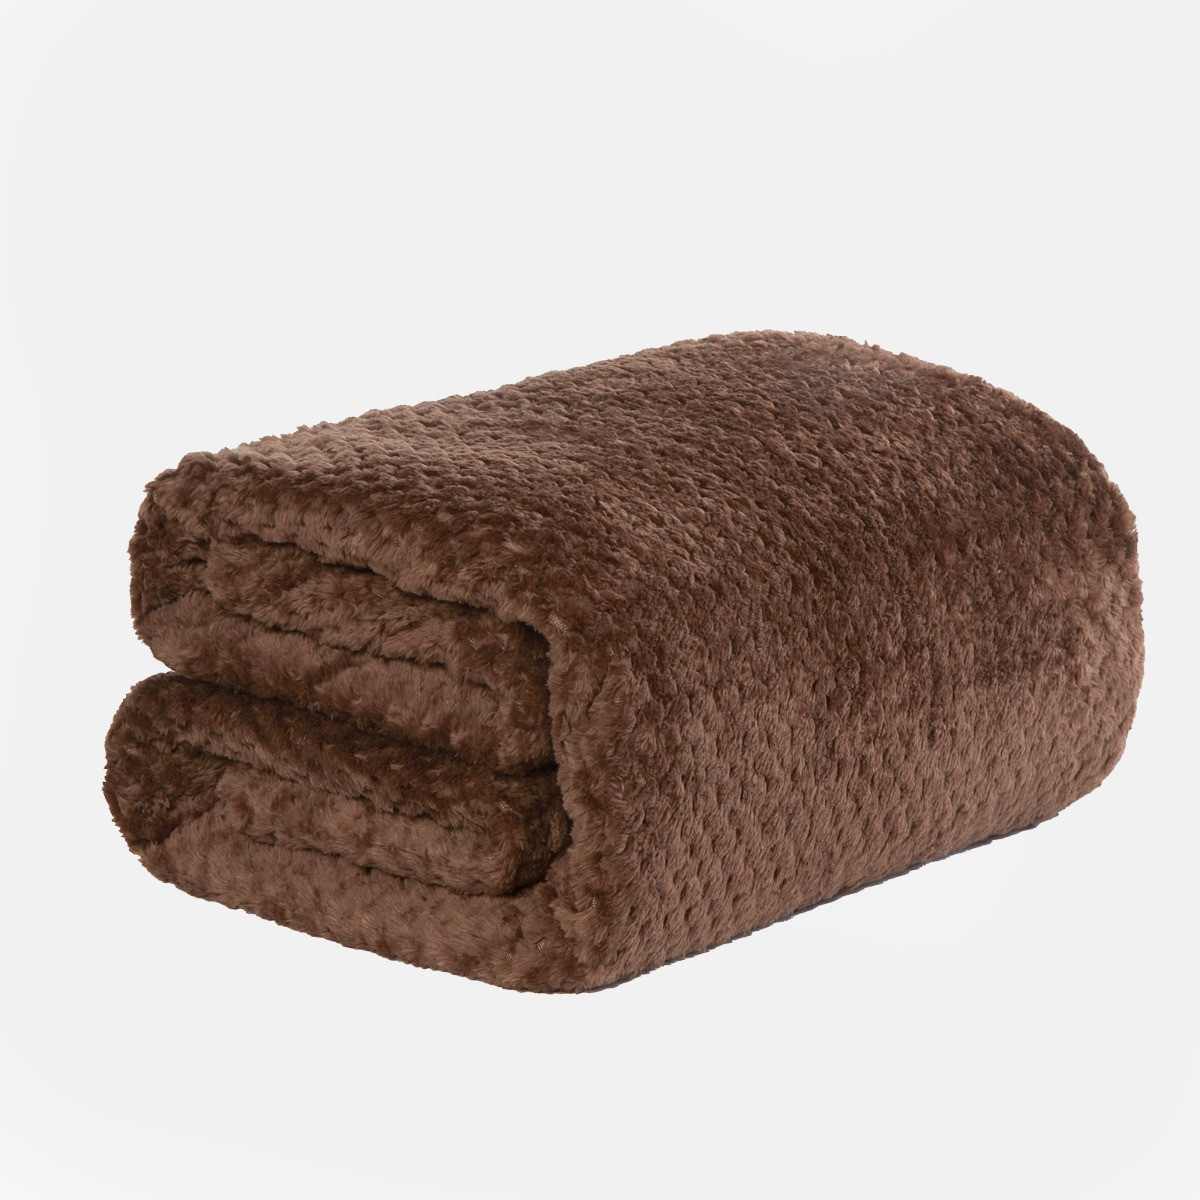 Luxury Waffle Mink Warm Throw Over Sofa Bed Soft Blanket 150 x 200cm Chocolate>